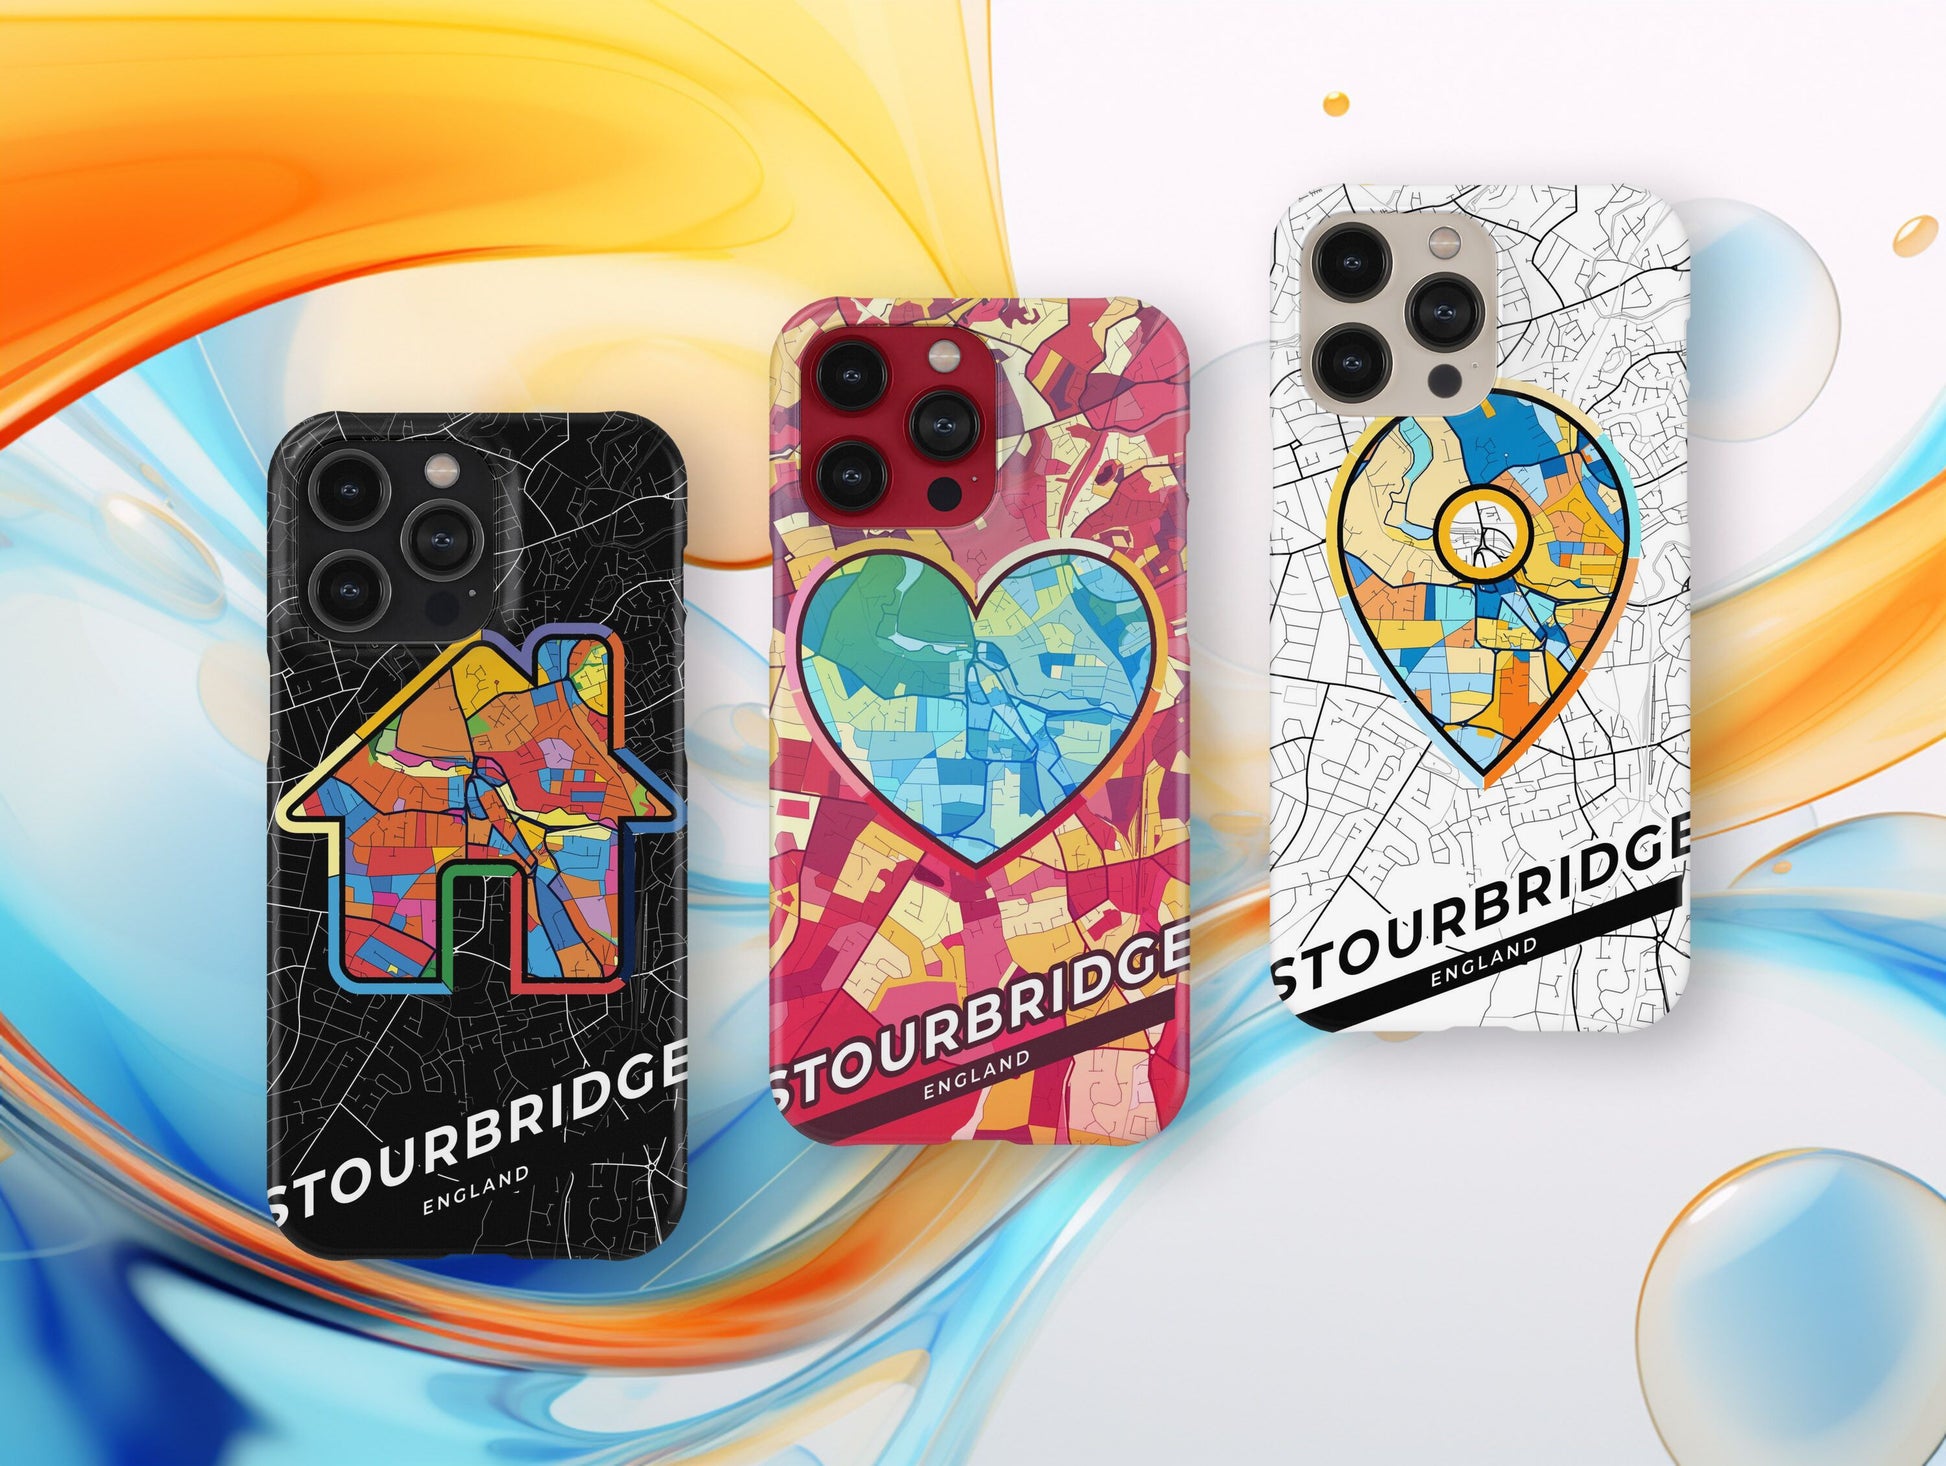 Stourbridge England slim phone case with colorful icon